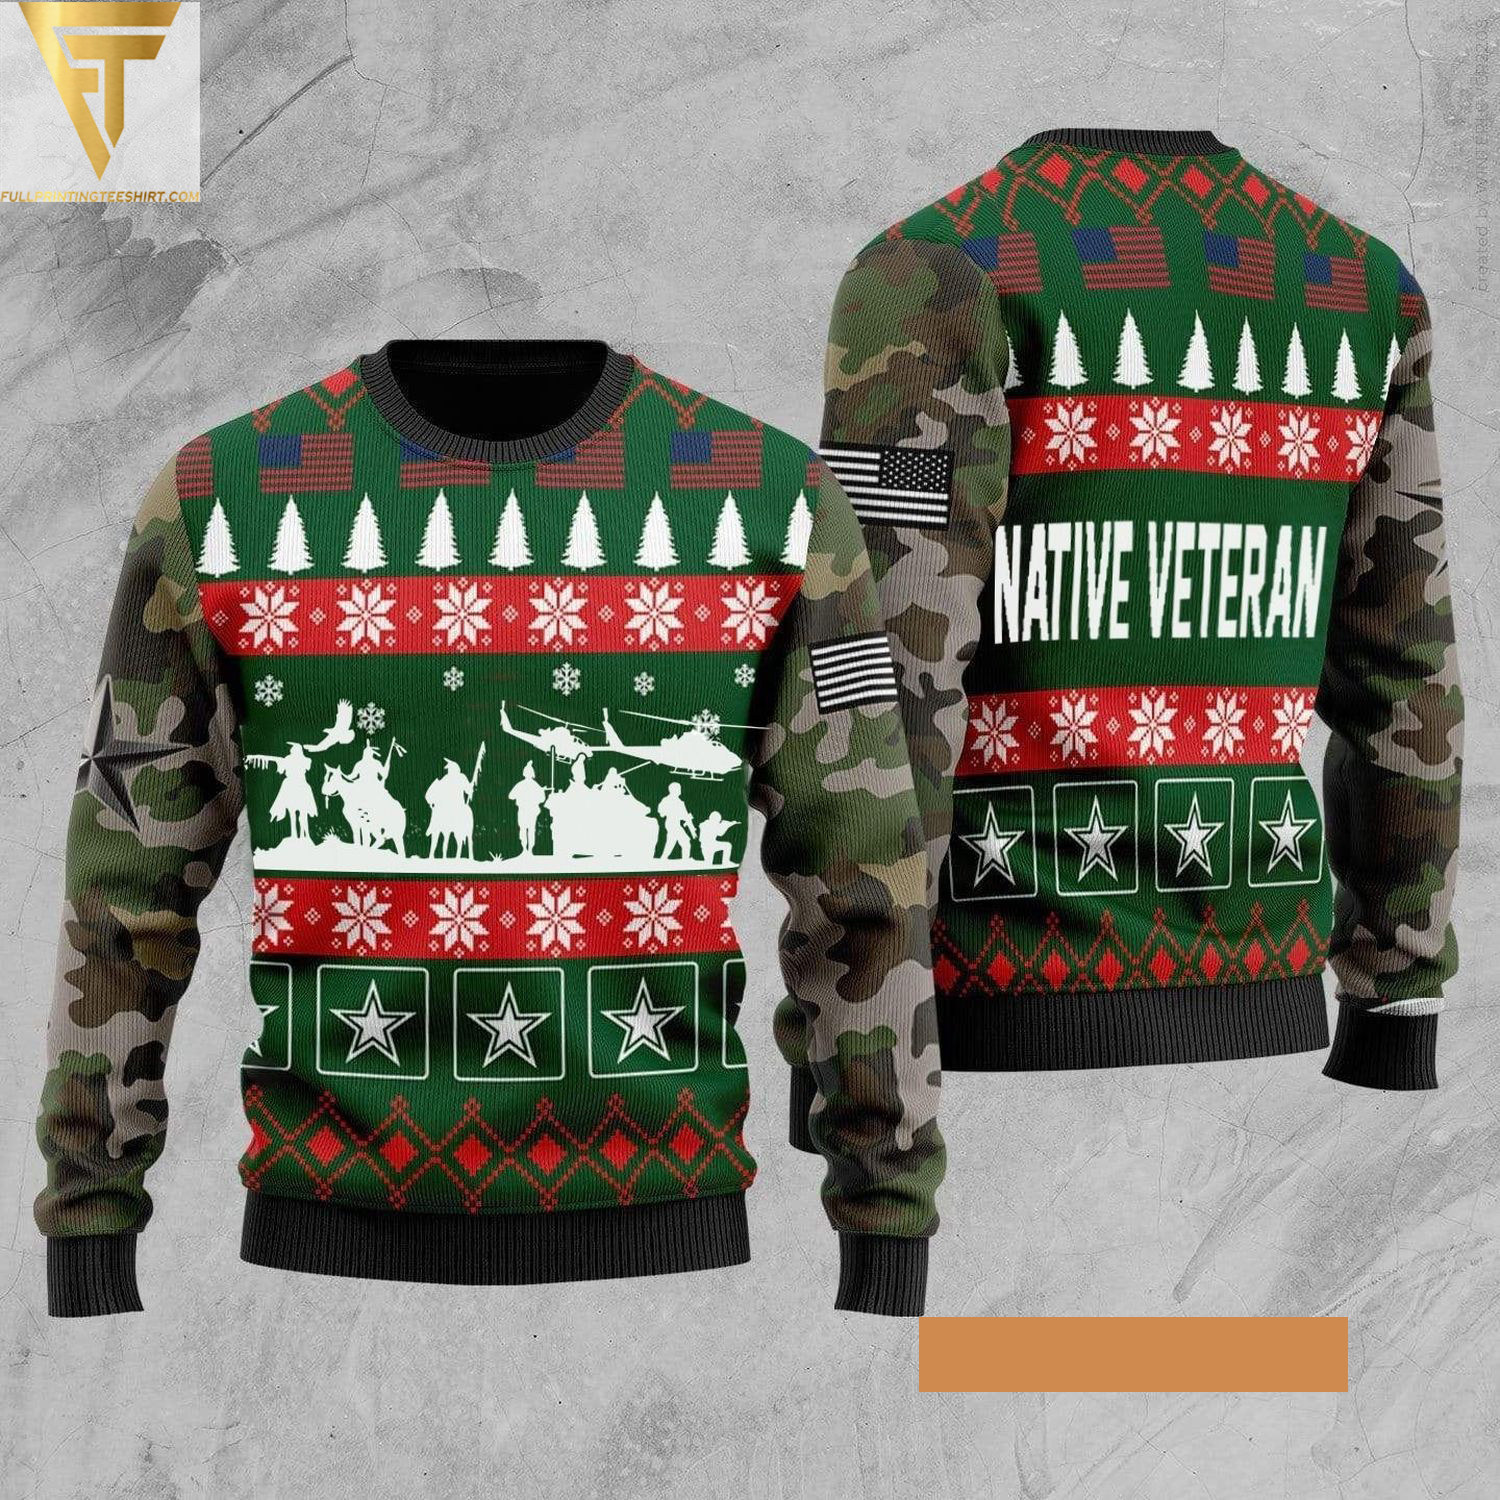 Native american native veteran ugly christmas sweater - Copy (2)